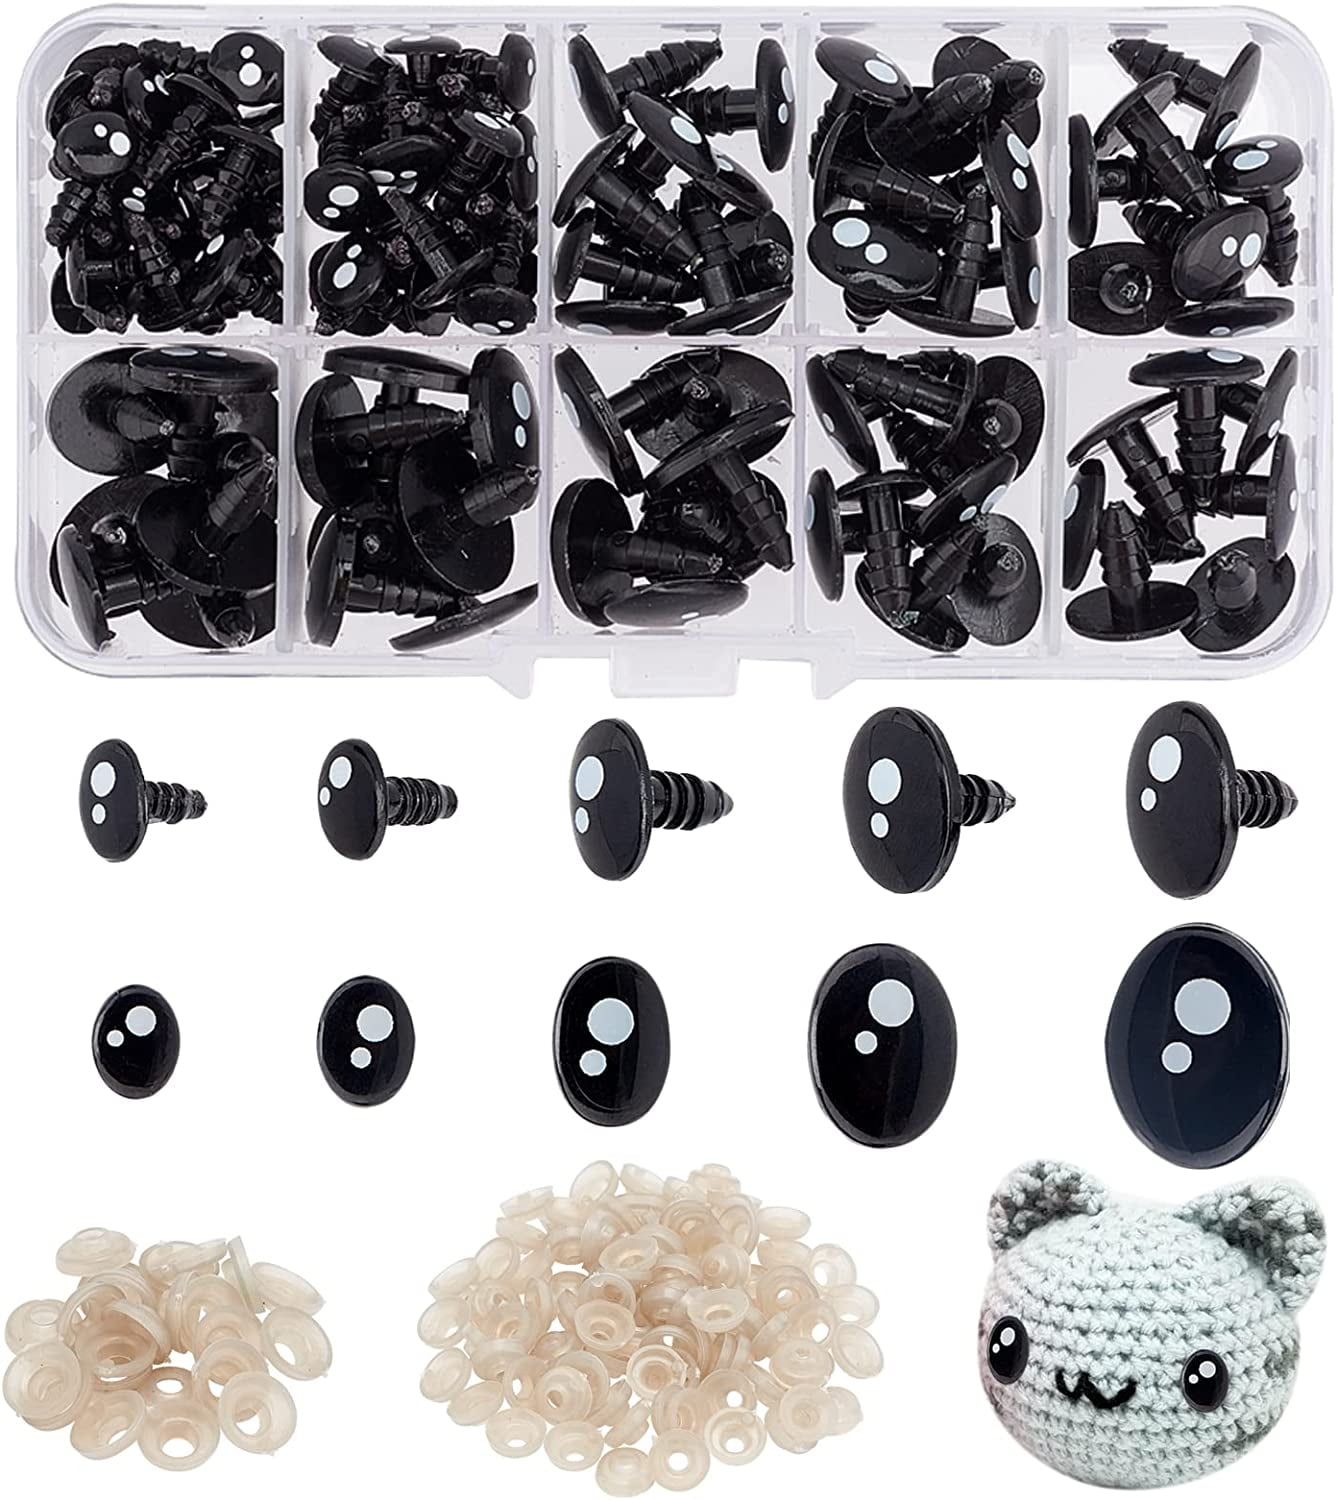 Yirtree 100pcs Plastic Safety Eyes Craft Doll Eyes, Black Safety Eyes for  Amigurumi, Puppet, Plush Animal and Teddy Bear 